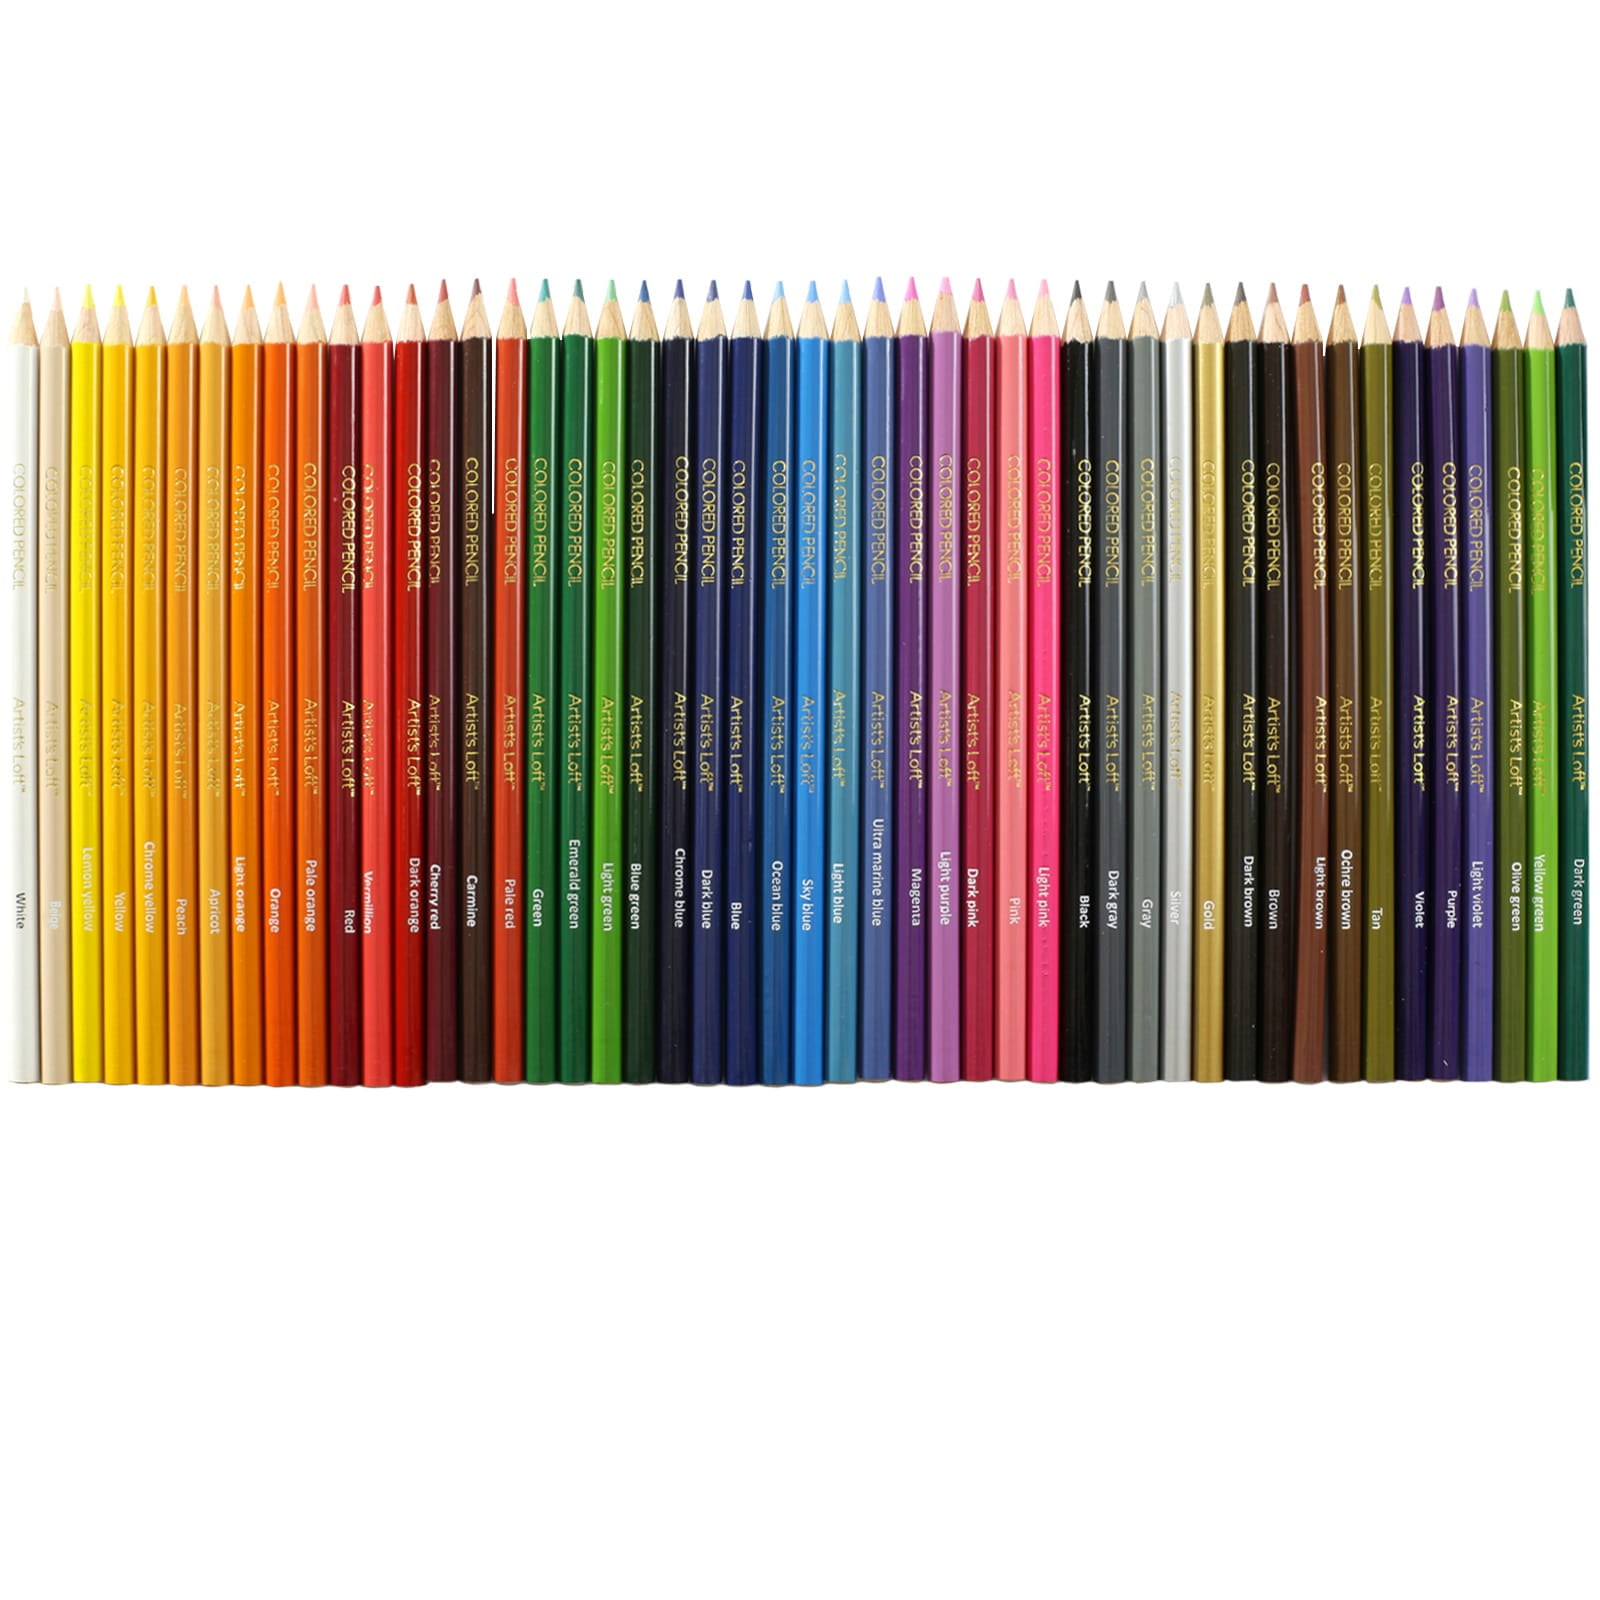 Tofficu 48pcs Suit for Kids Artist Drawing Pencil Kids Kits Graphite Pencil  Colored Pencils Adult Colorful Pencils Manual Pencil Sharpener Art Colored